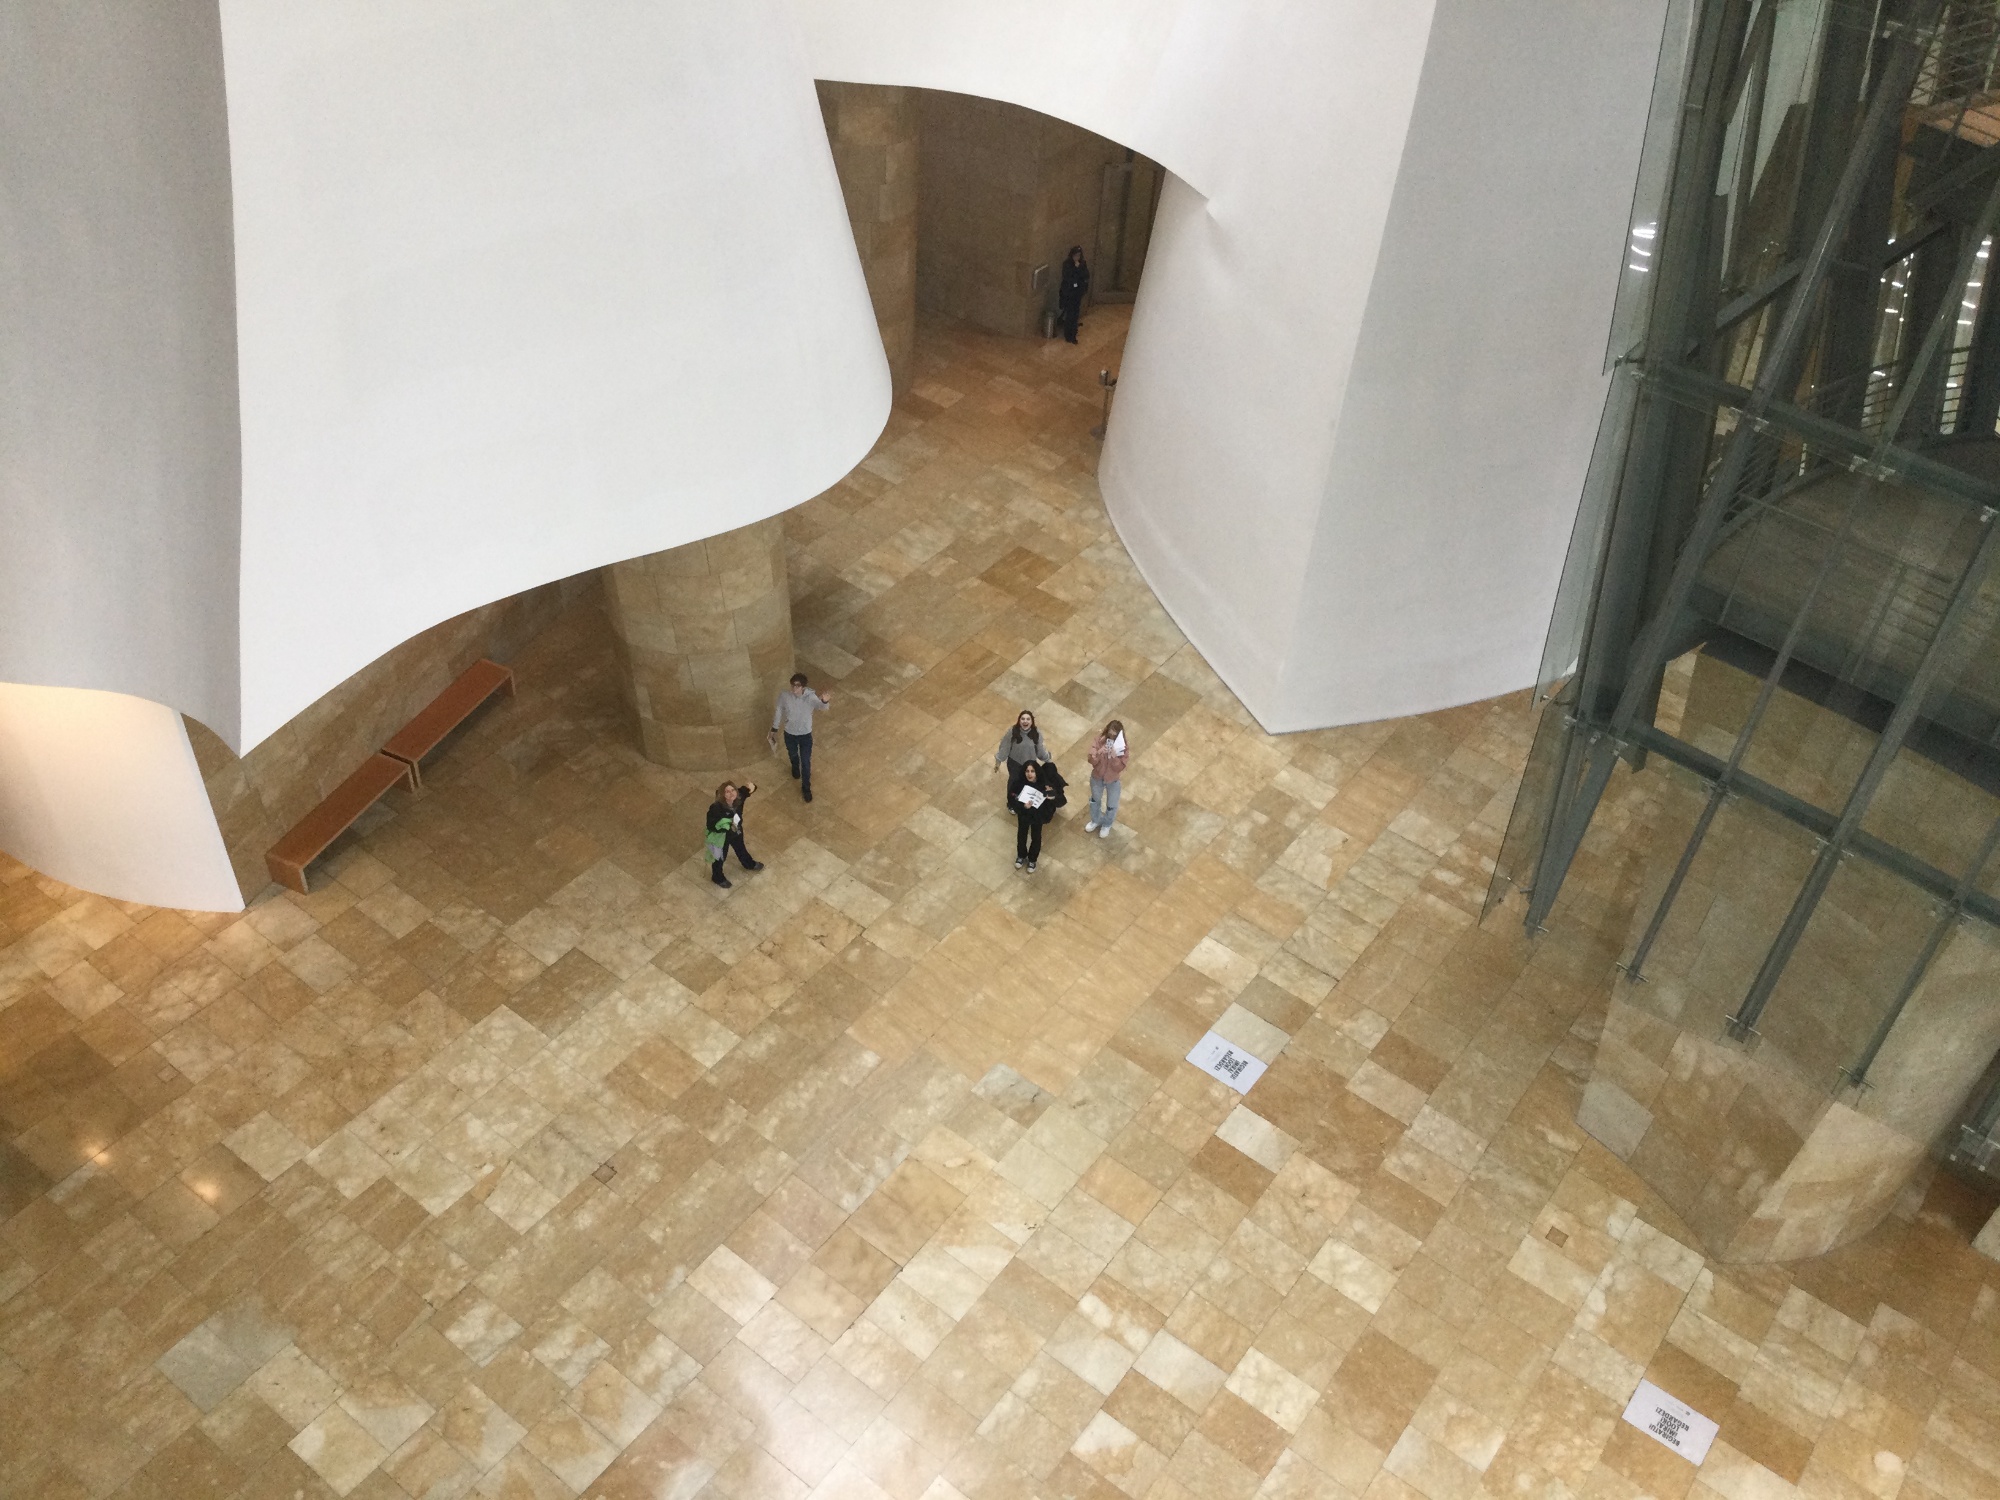 Lingfield MUN visit the Guggenheim Museum  in Bilbao